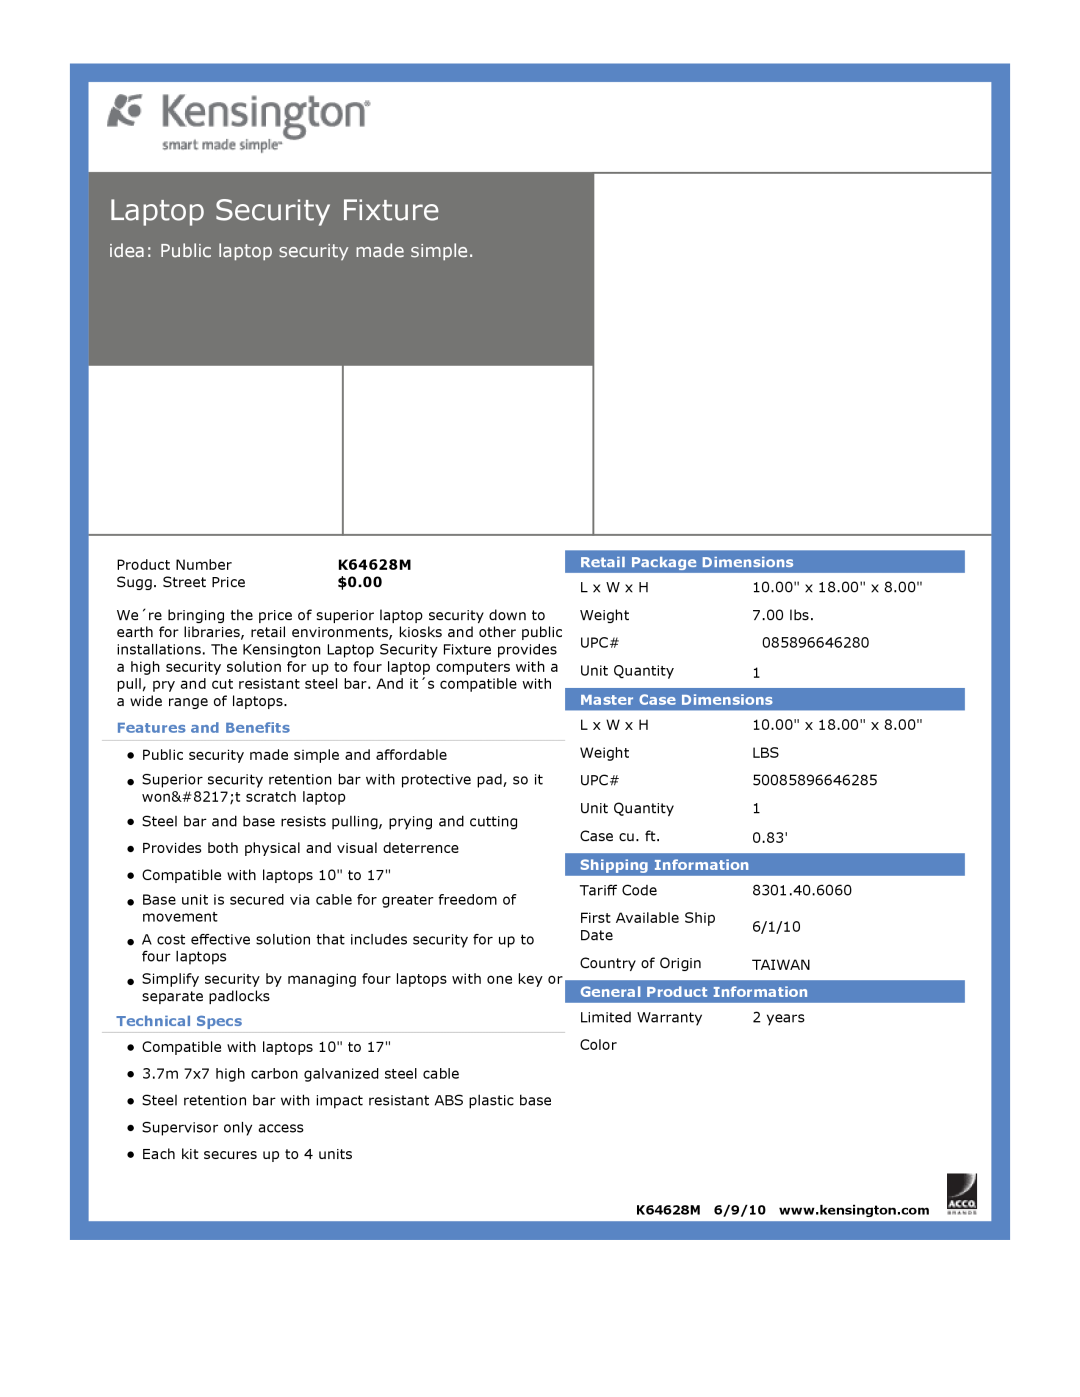 Kensington EU64325 Laptop Security Fixture, idea: Public laptop security made simple, $0.00, Features and Benefits 